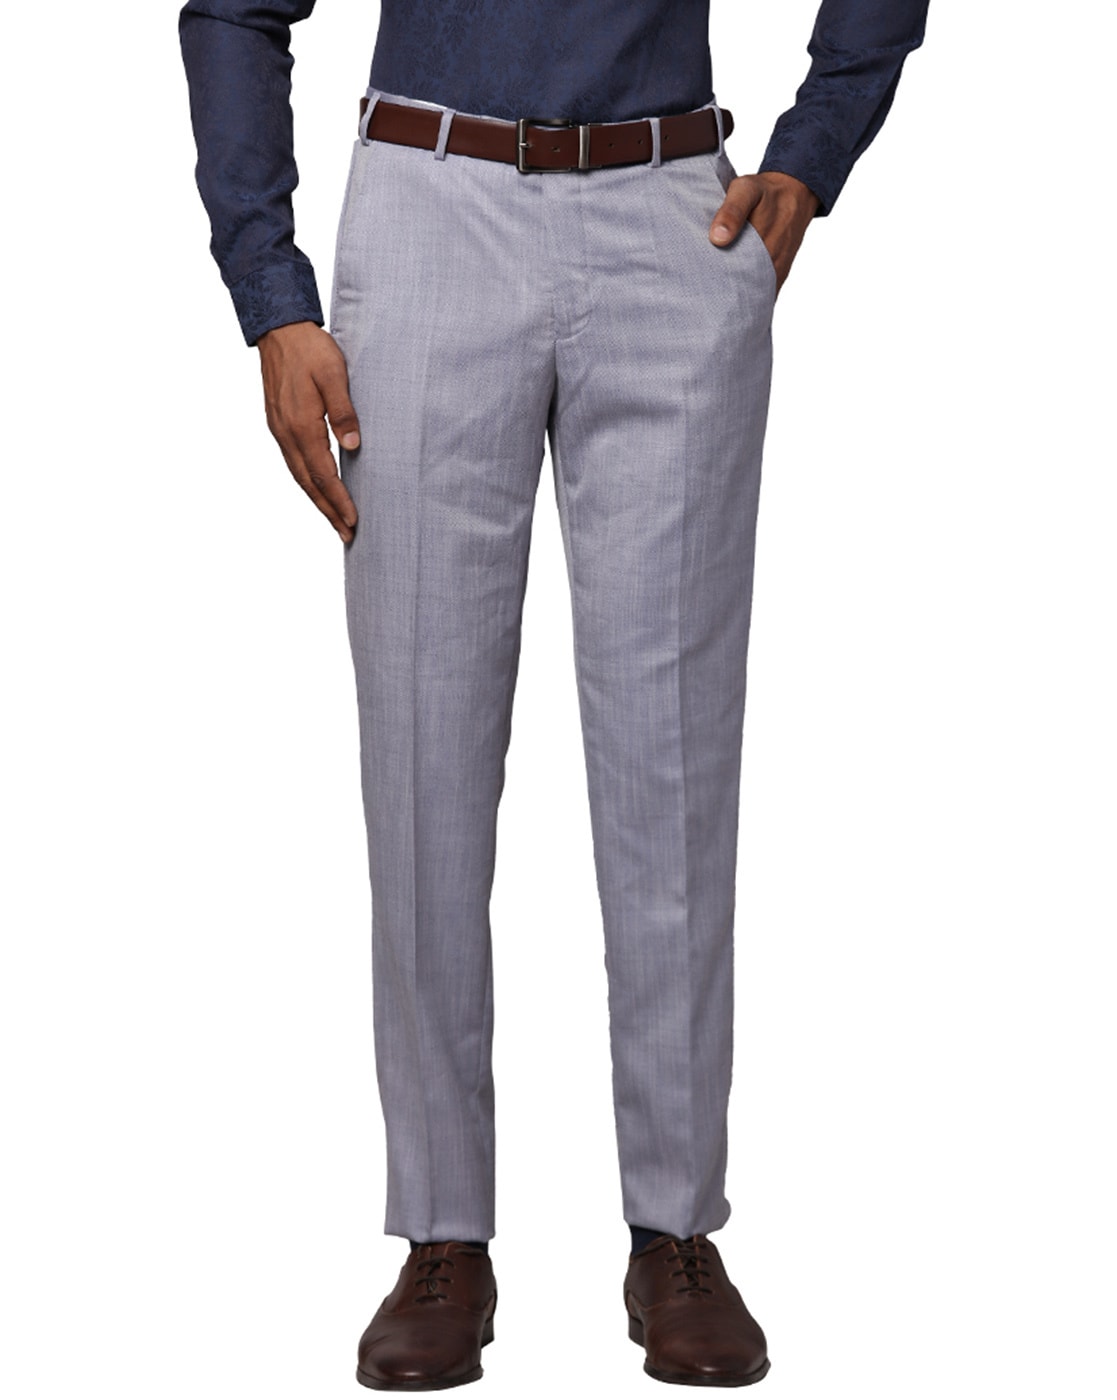 Next Look Regular Fit Men Dark Blue Trousers  Buy Next Look Regular Fit Men  Dark Blue Trousers Online at Best Prices in India  Flipkartcom